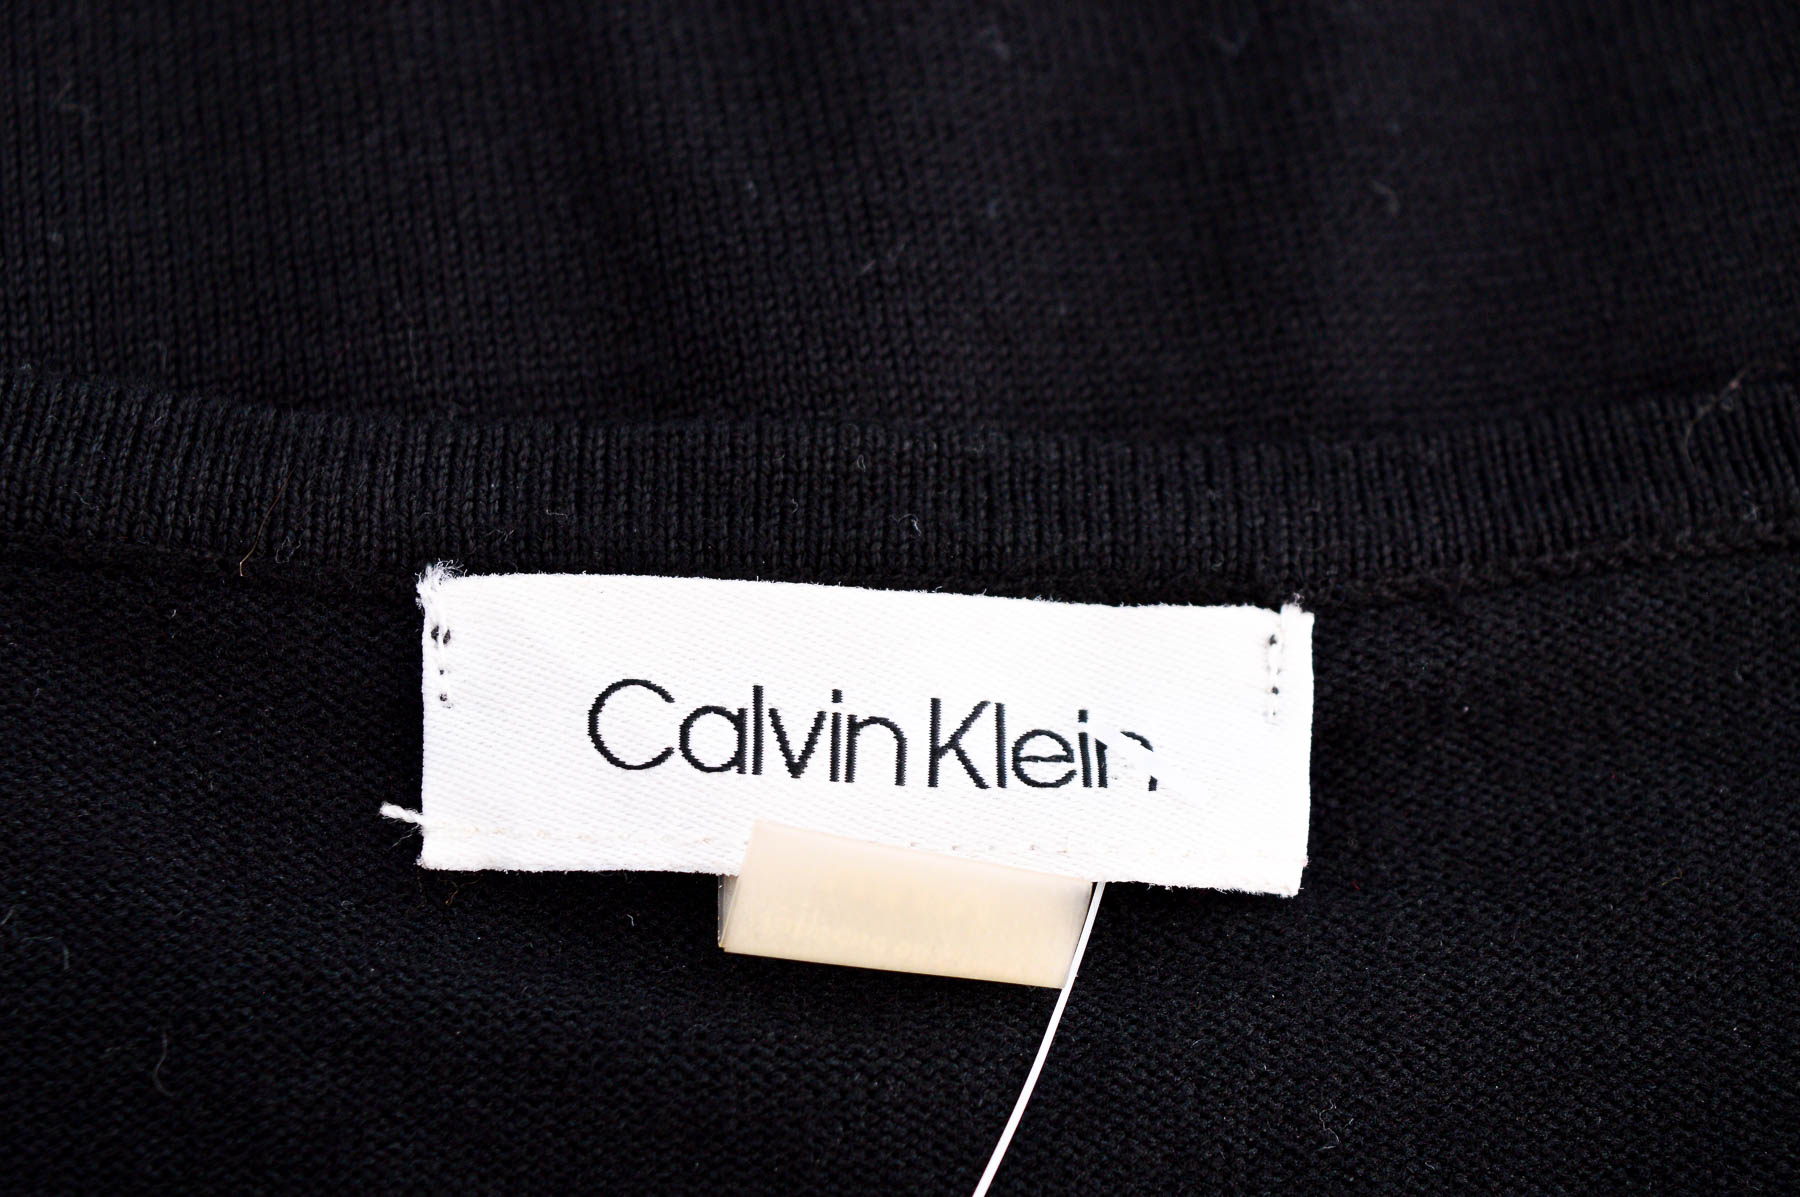 Dress - Calvin Klein - 2